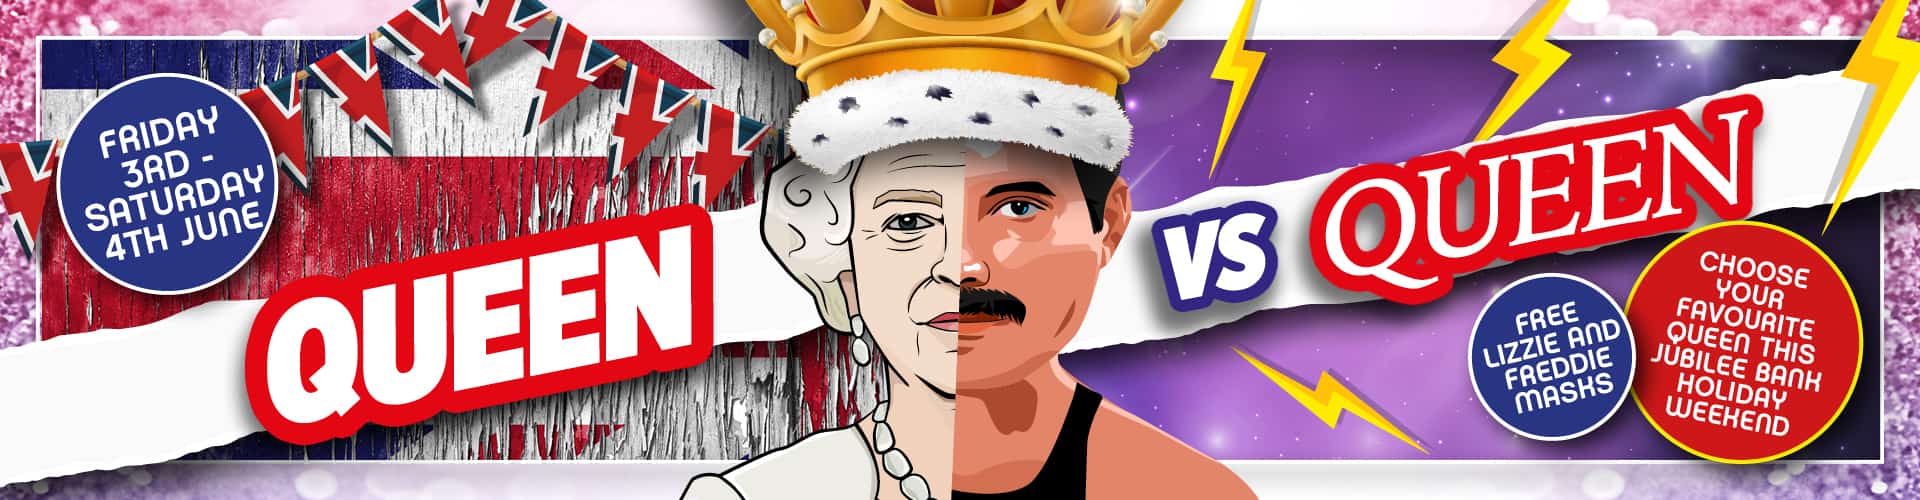 Queen vs Queen for the Jubilee Bank Holiday Weekend